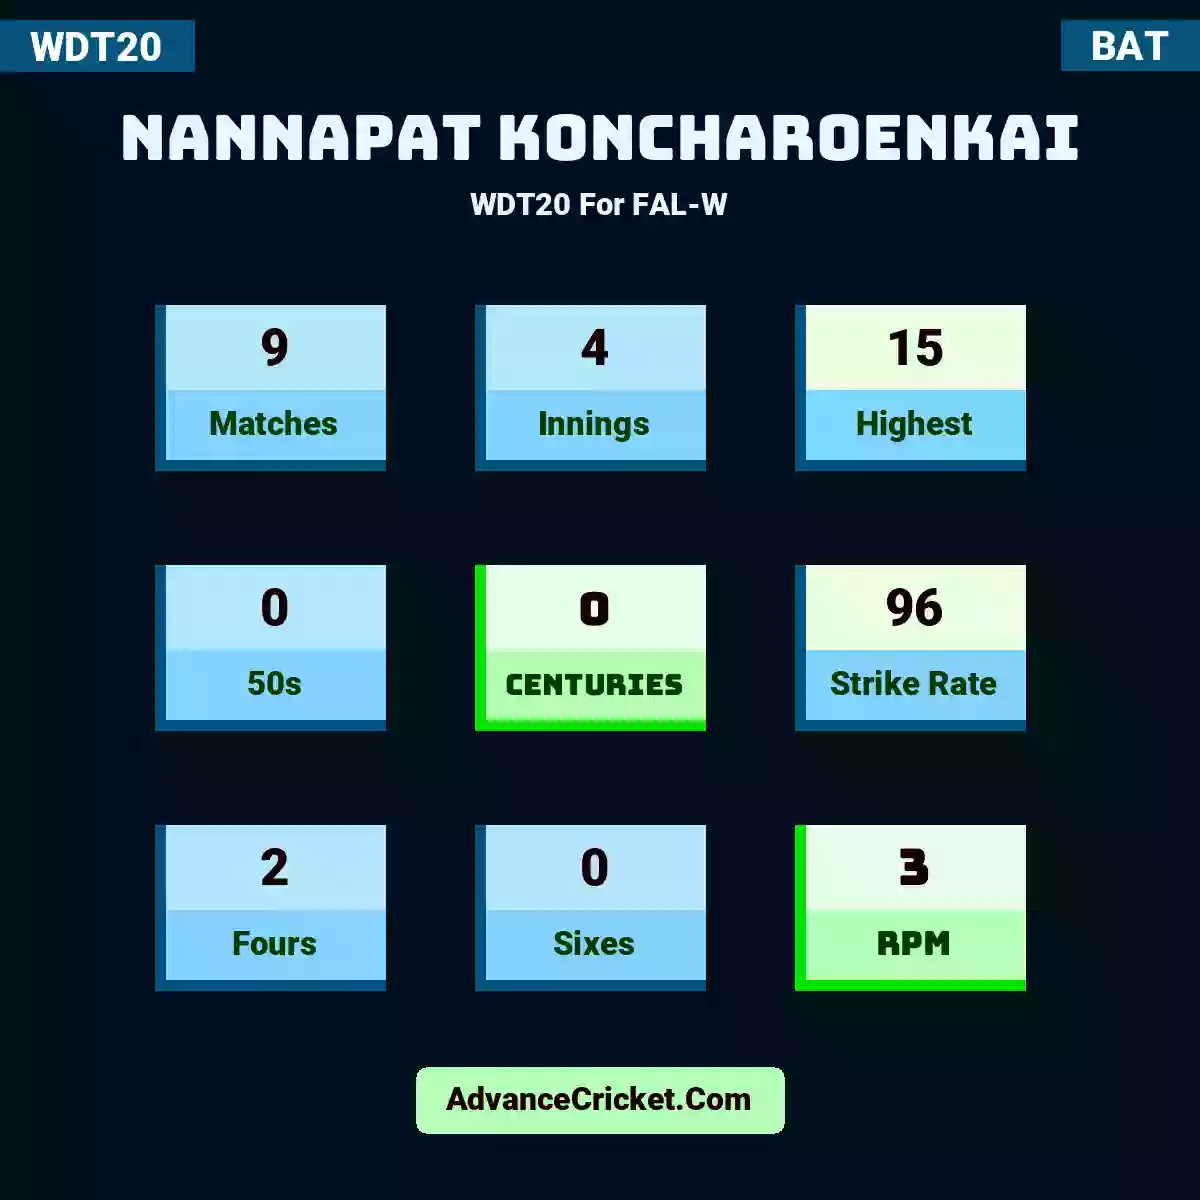 Nannapat Koncharoenkai WDT20  For FAL-W, Nannapat Koncharoenkai played 9 matches, scored 15 runs as highest, 0 half-centuries, and 0 centuries, with a strike rate of 96. N.Koncharoenkai hit 2 fours and 0 sixes, with an RPM of 3.